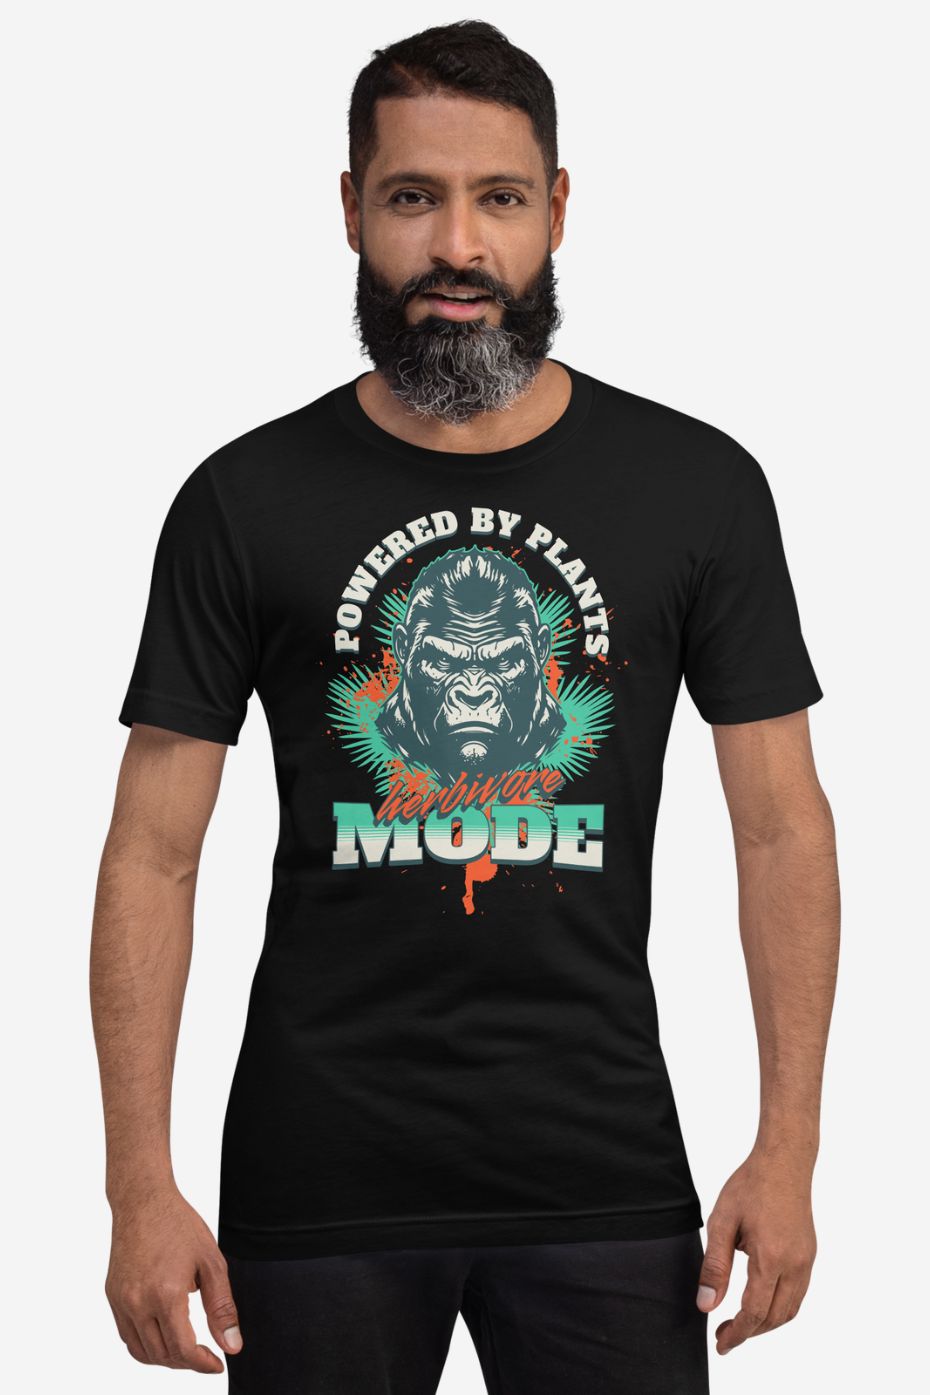 Herbivore Mode - Unisex t-shirt